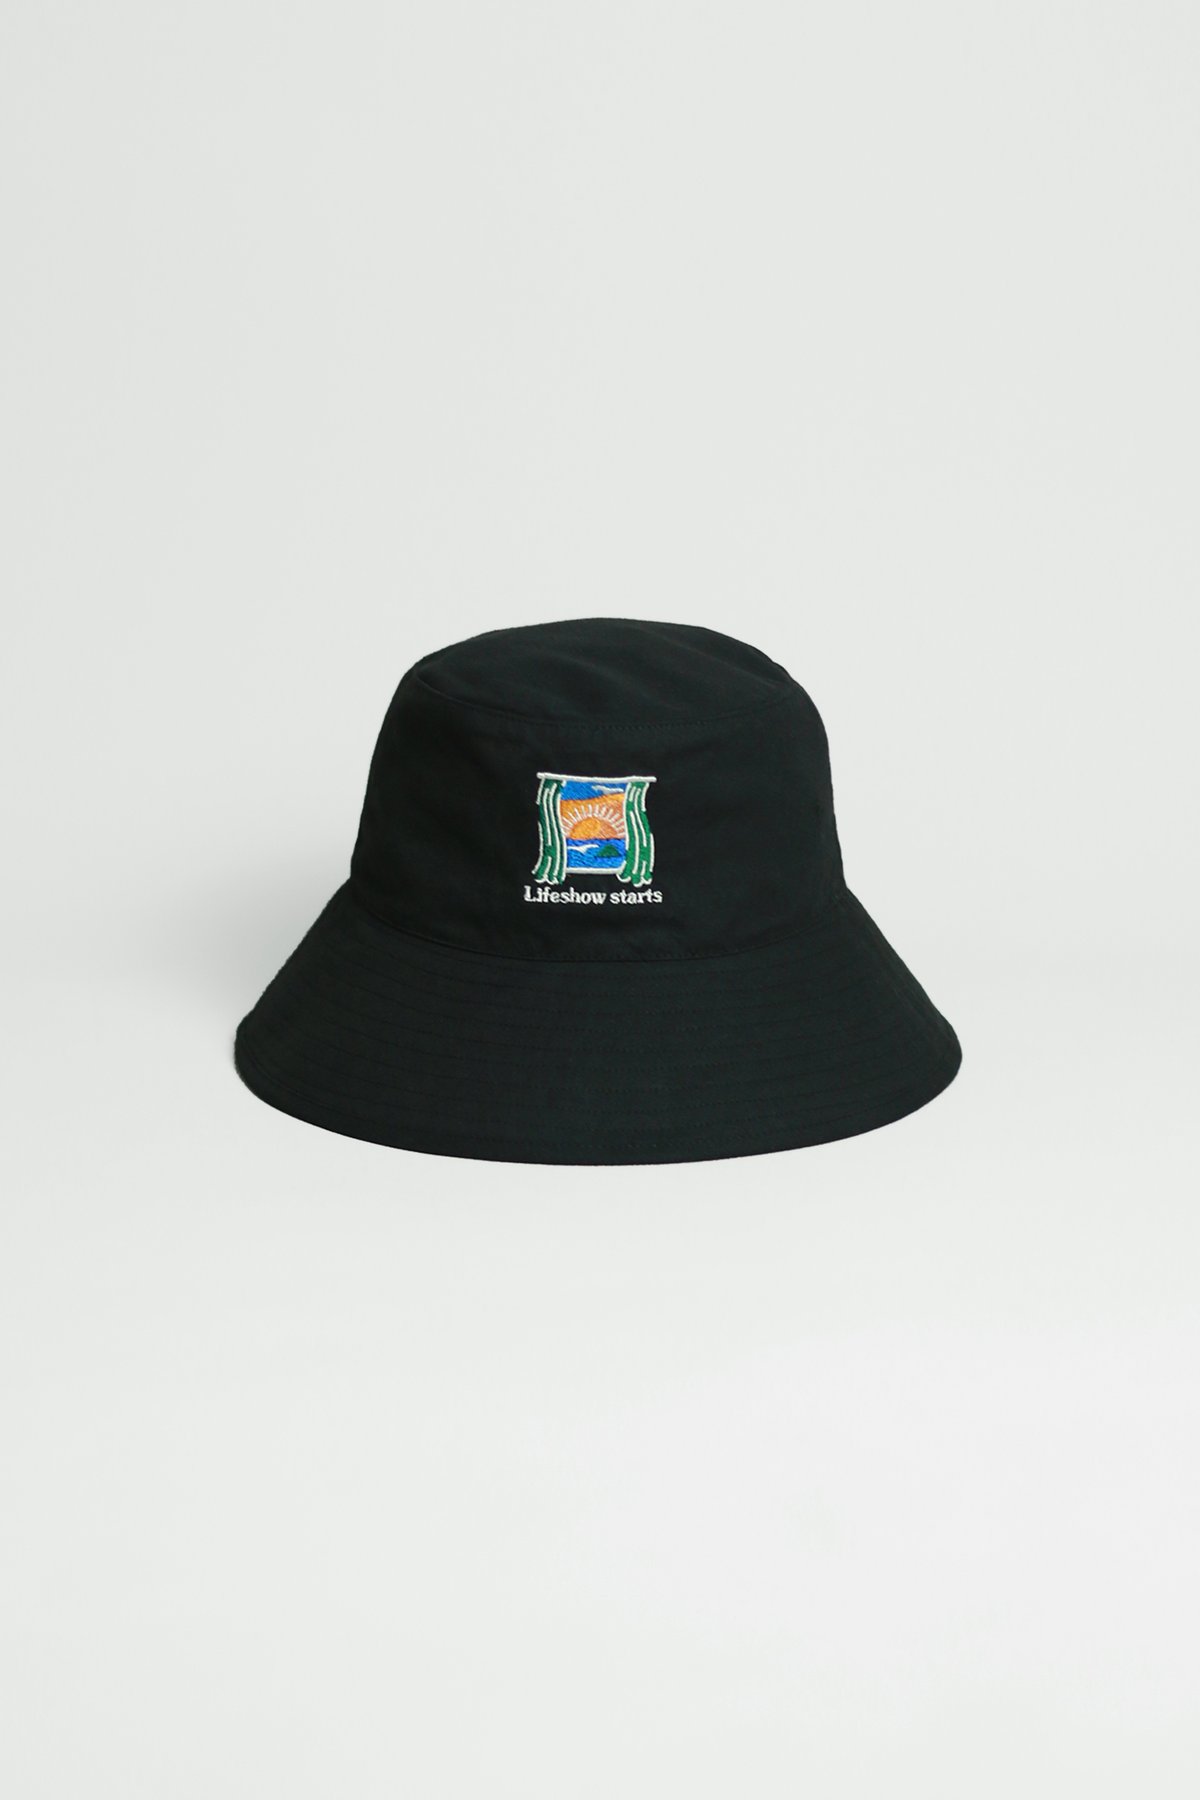 Image of "Lifeshow Starts" Bucket Hat